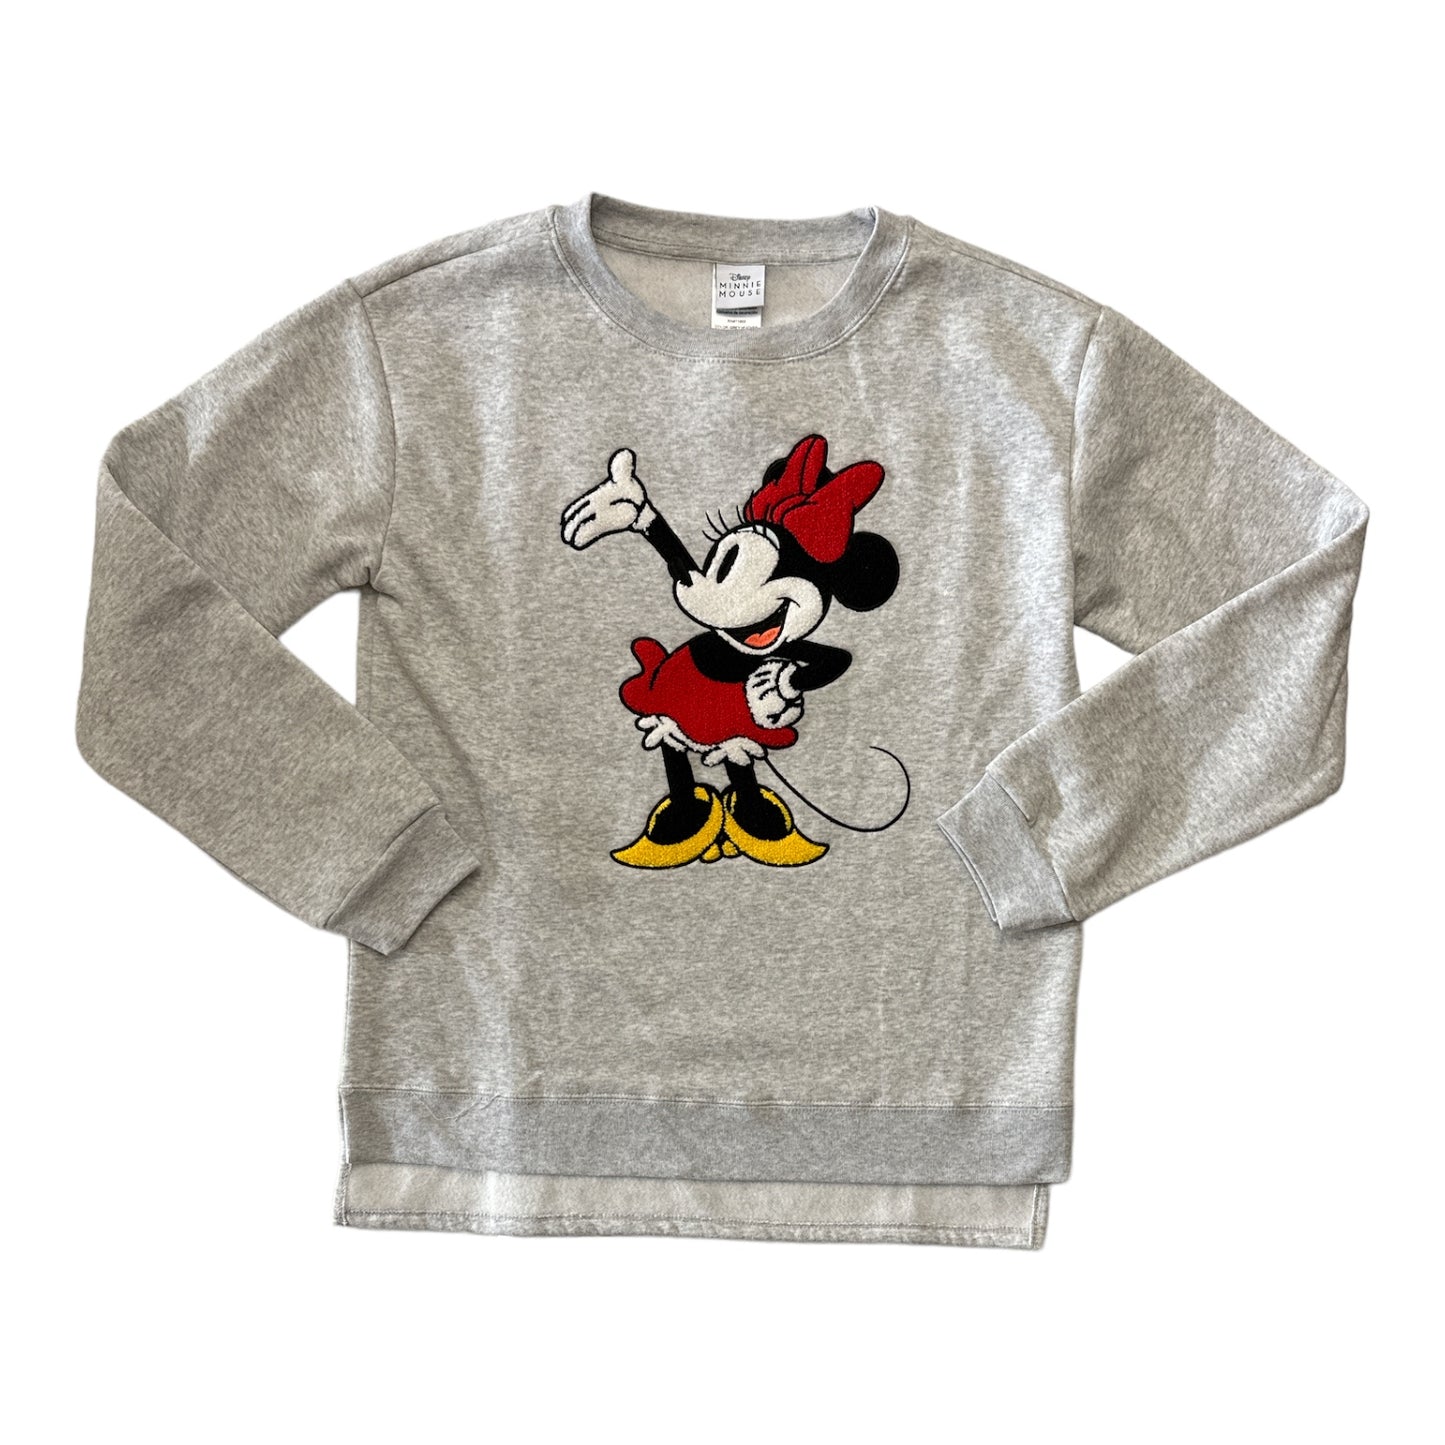 Disney Minnie Mouse Women's Crewneck Fleece Lined Chenille Patch Print Sweatshirt